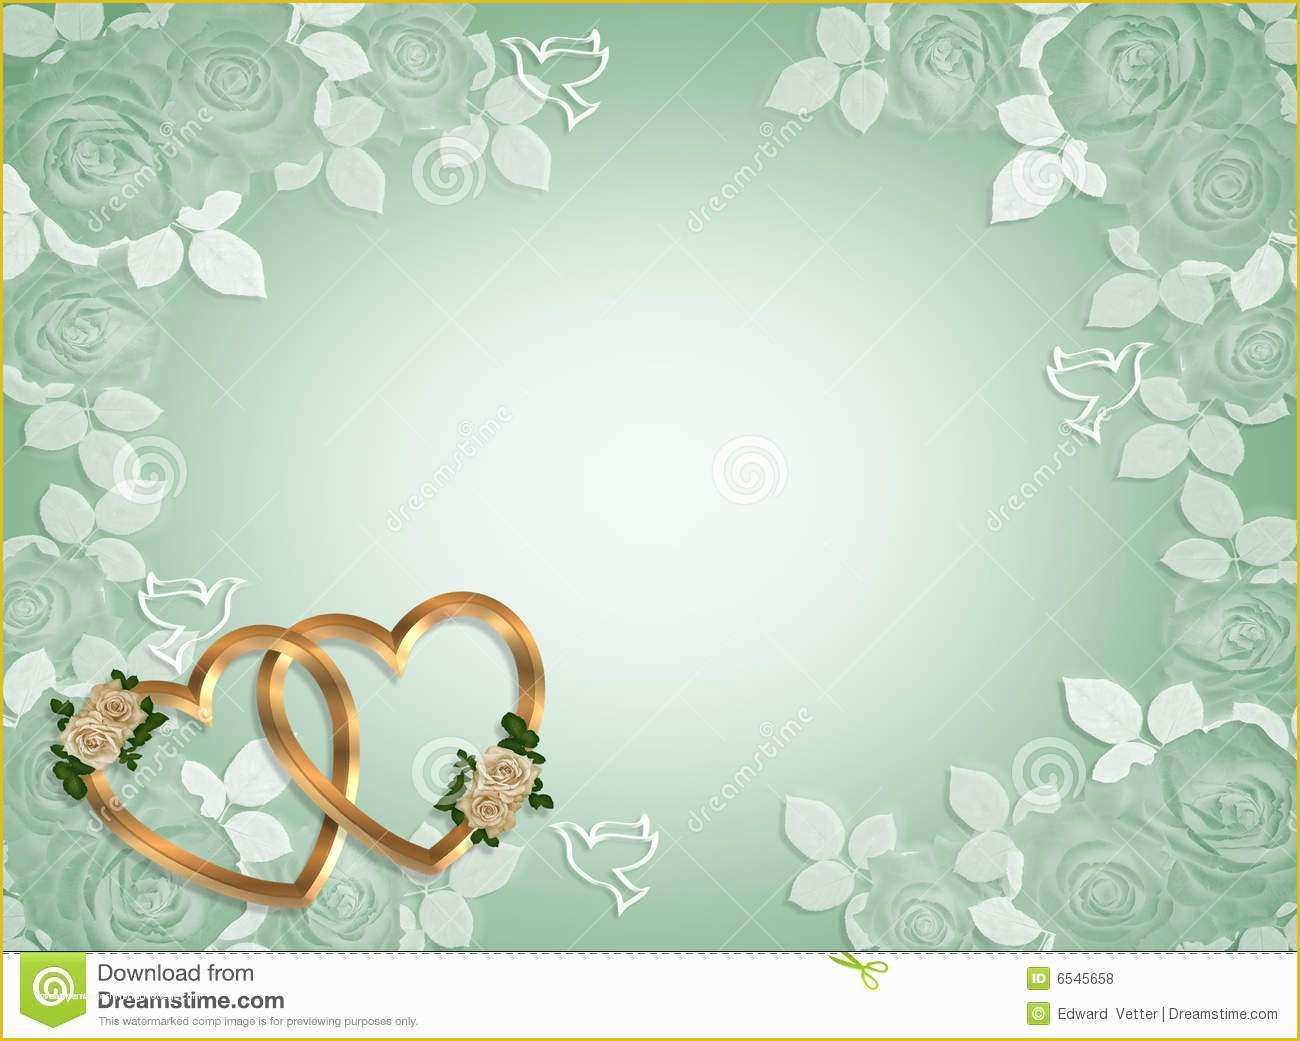 Editable Hindu Wedding Invitation Cards Templates Free Download Of Wedding Invitation Background Designs Free Luxury